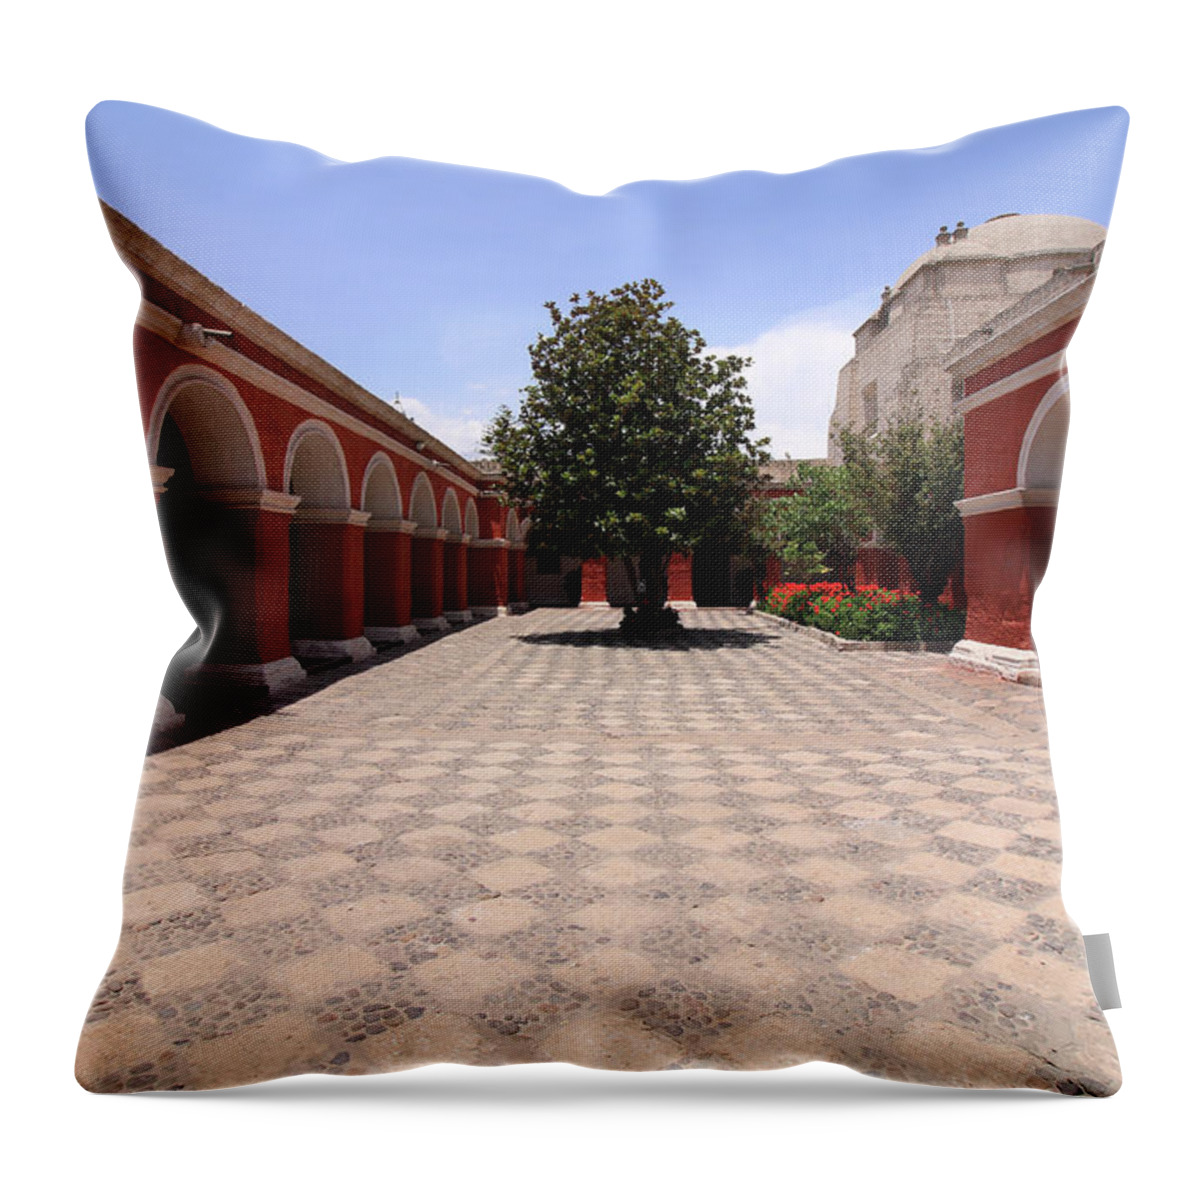 Santa Catalina Monastery Throw Pillow featuring the photograph Plaza At Santa Catalina Monastery by Aidan Moran